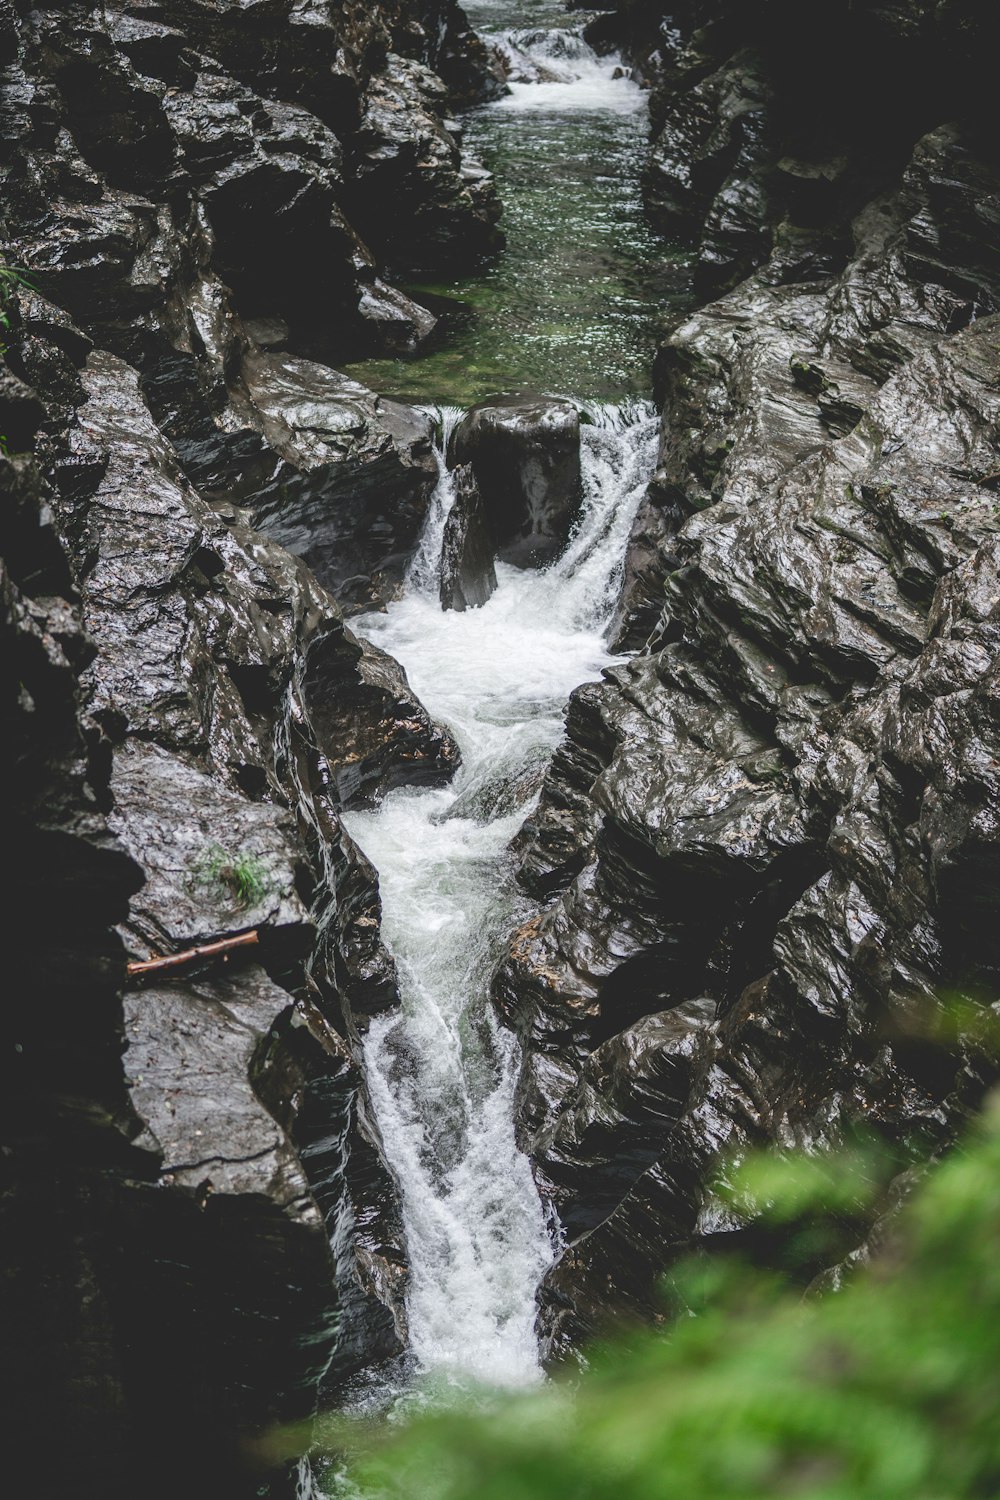 a small waterfall flowing down a rocky hillside